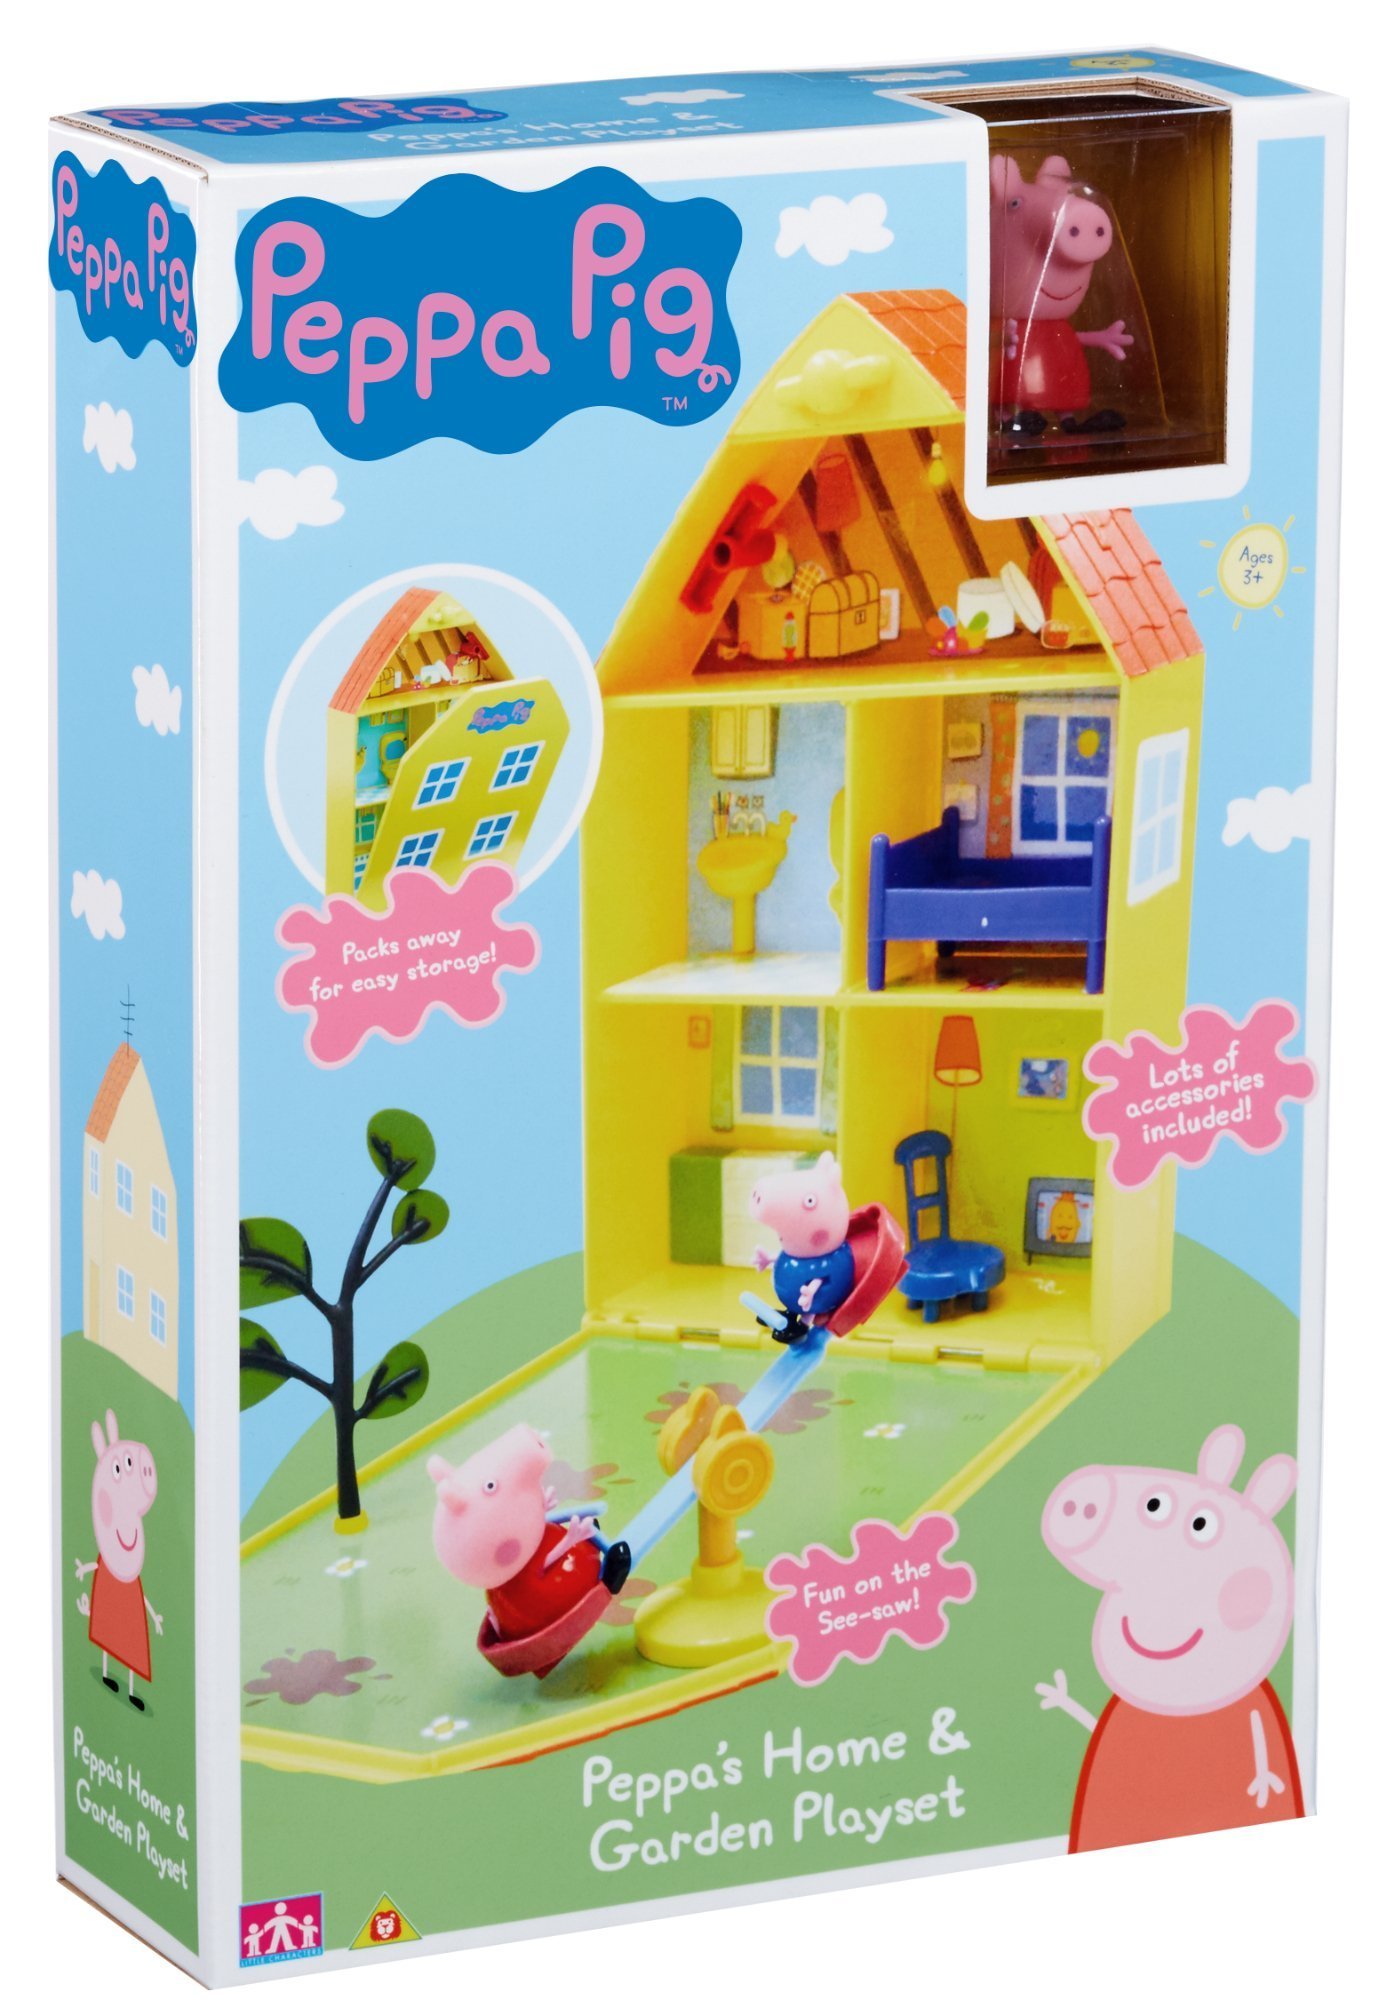 Peppa's Home & Garden Playhouse